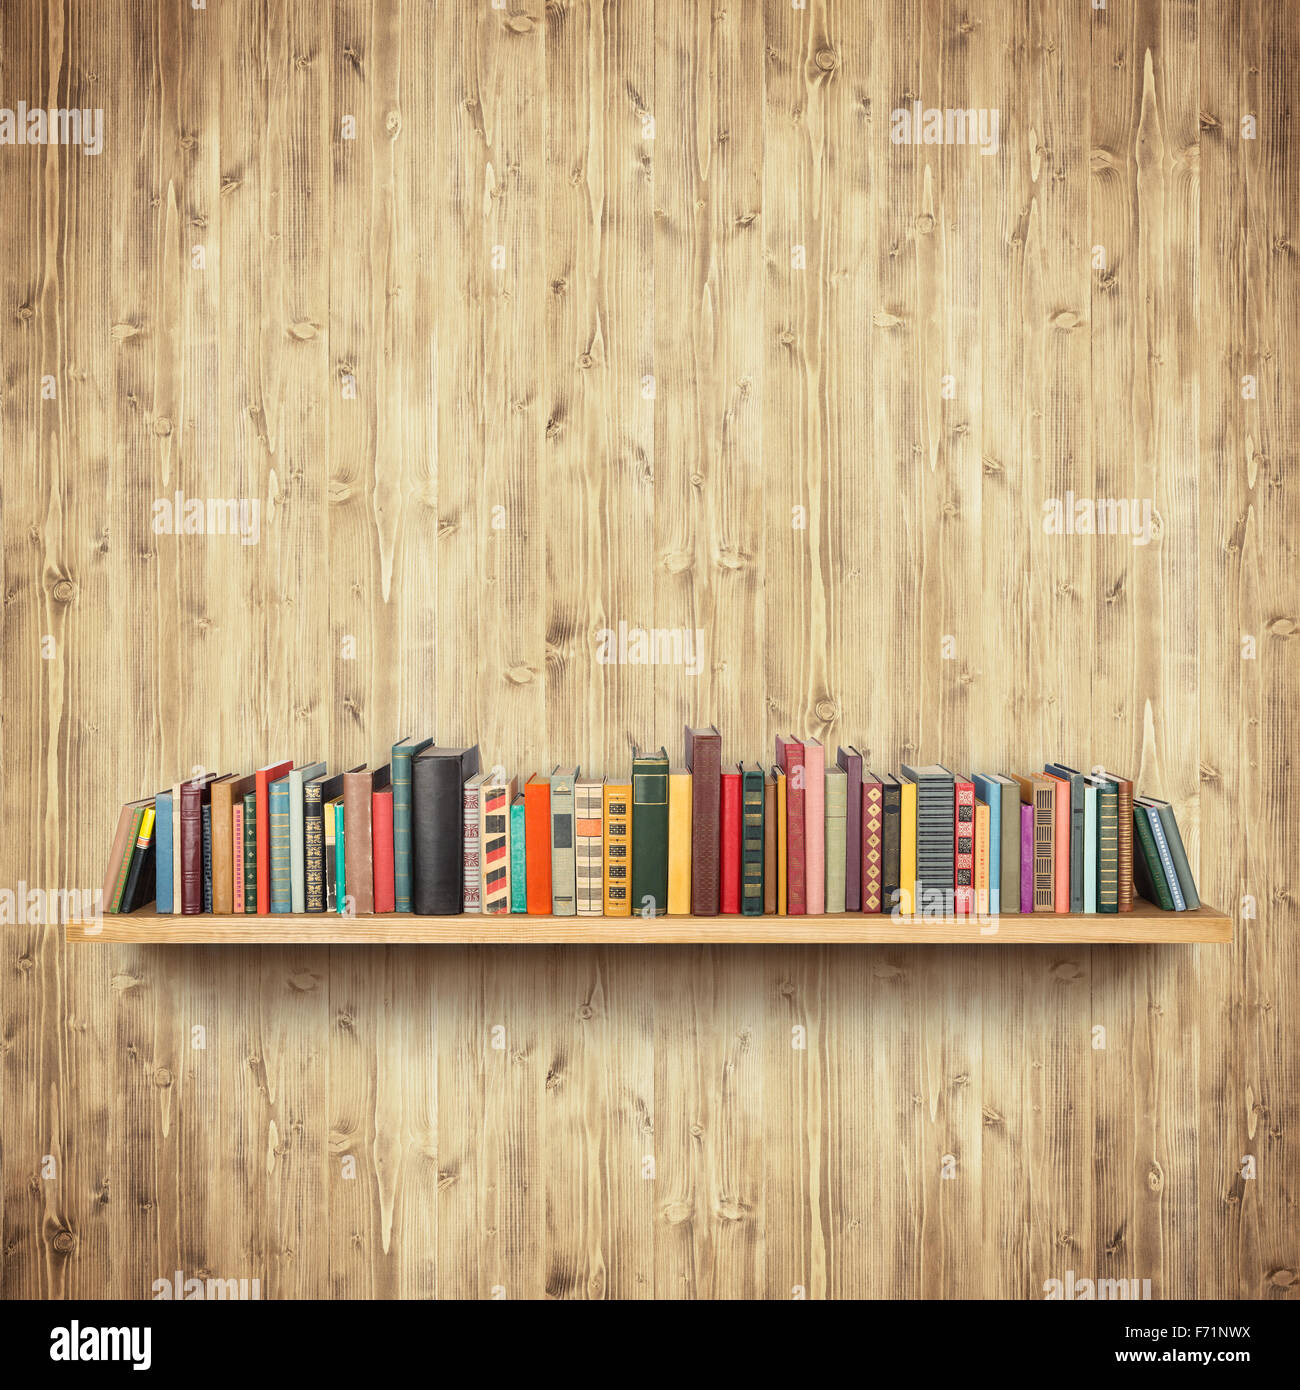 Bookshelf on yellow wooden wall Stock Photo